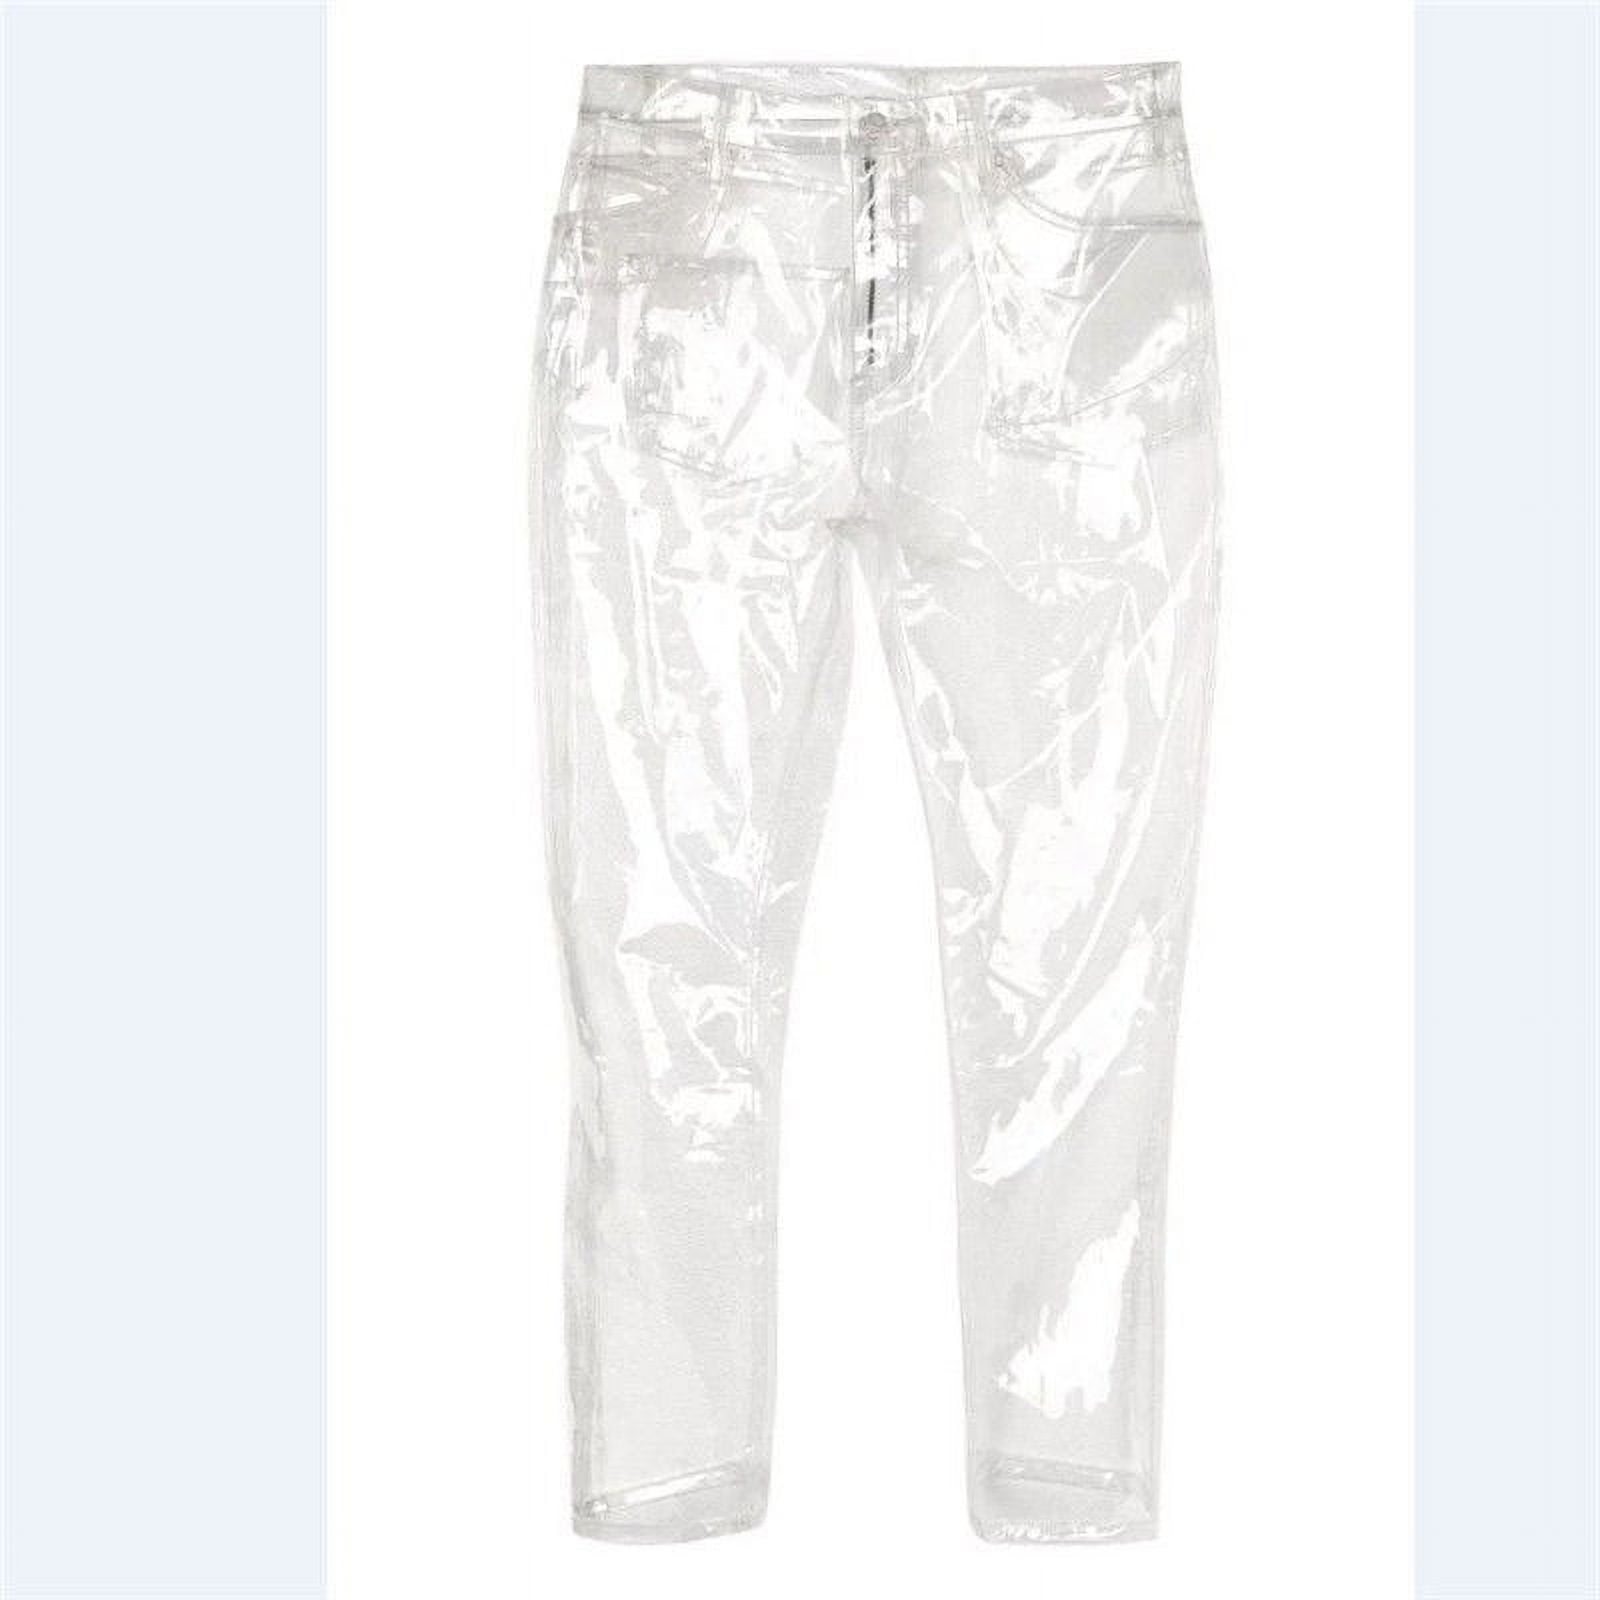 46/48 Hip Clear Plastic Waterproof Pants -  Canada